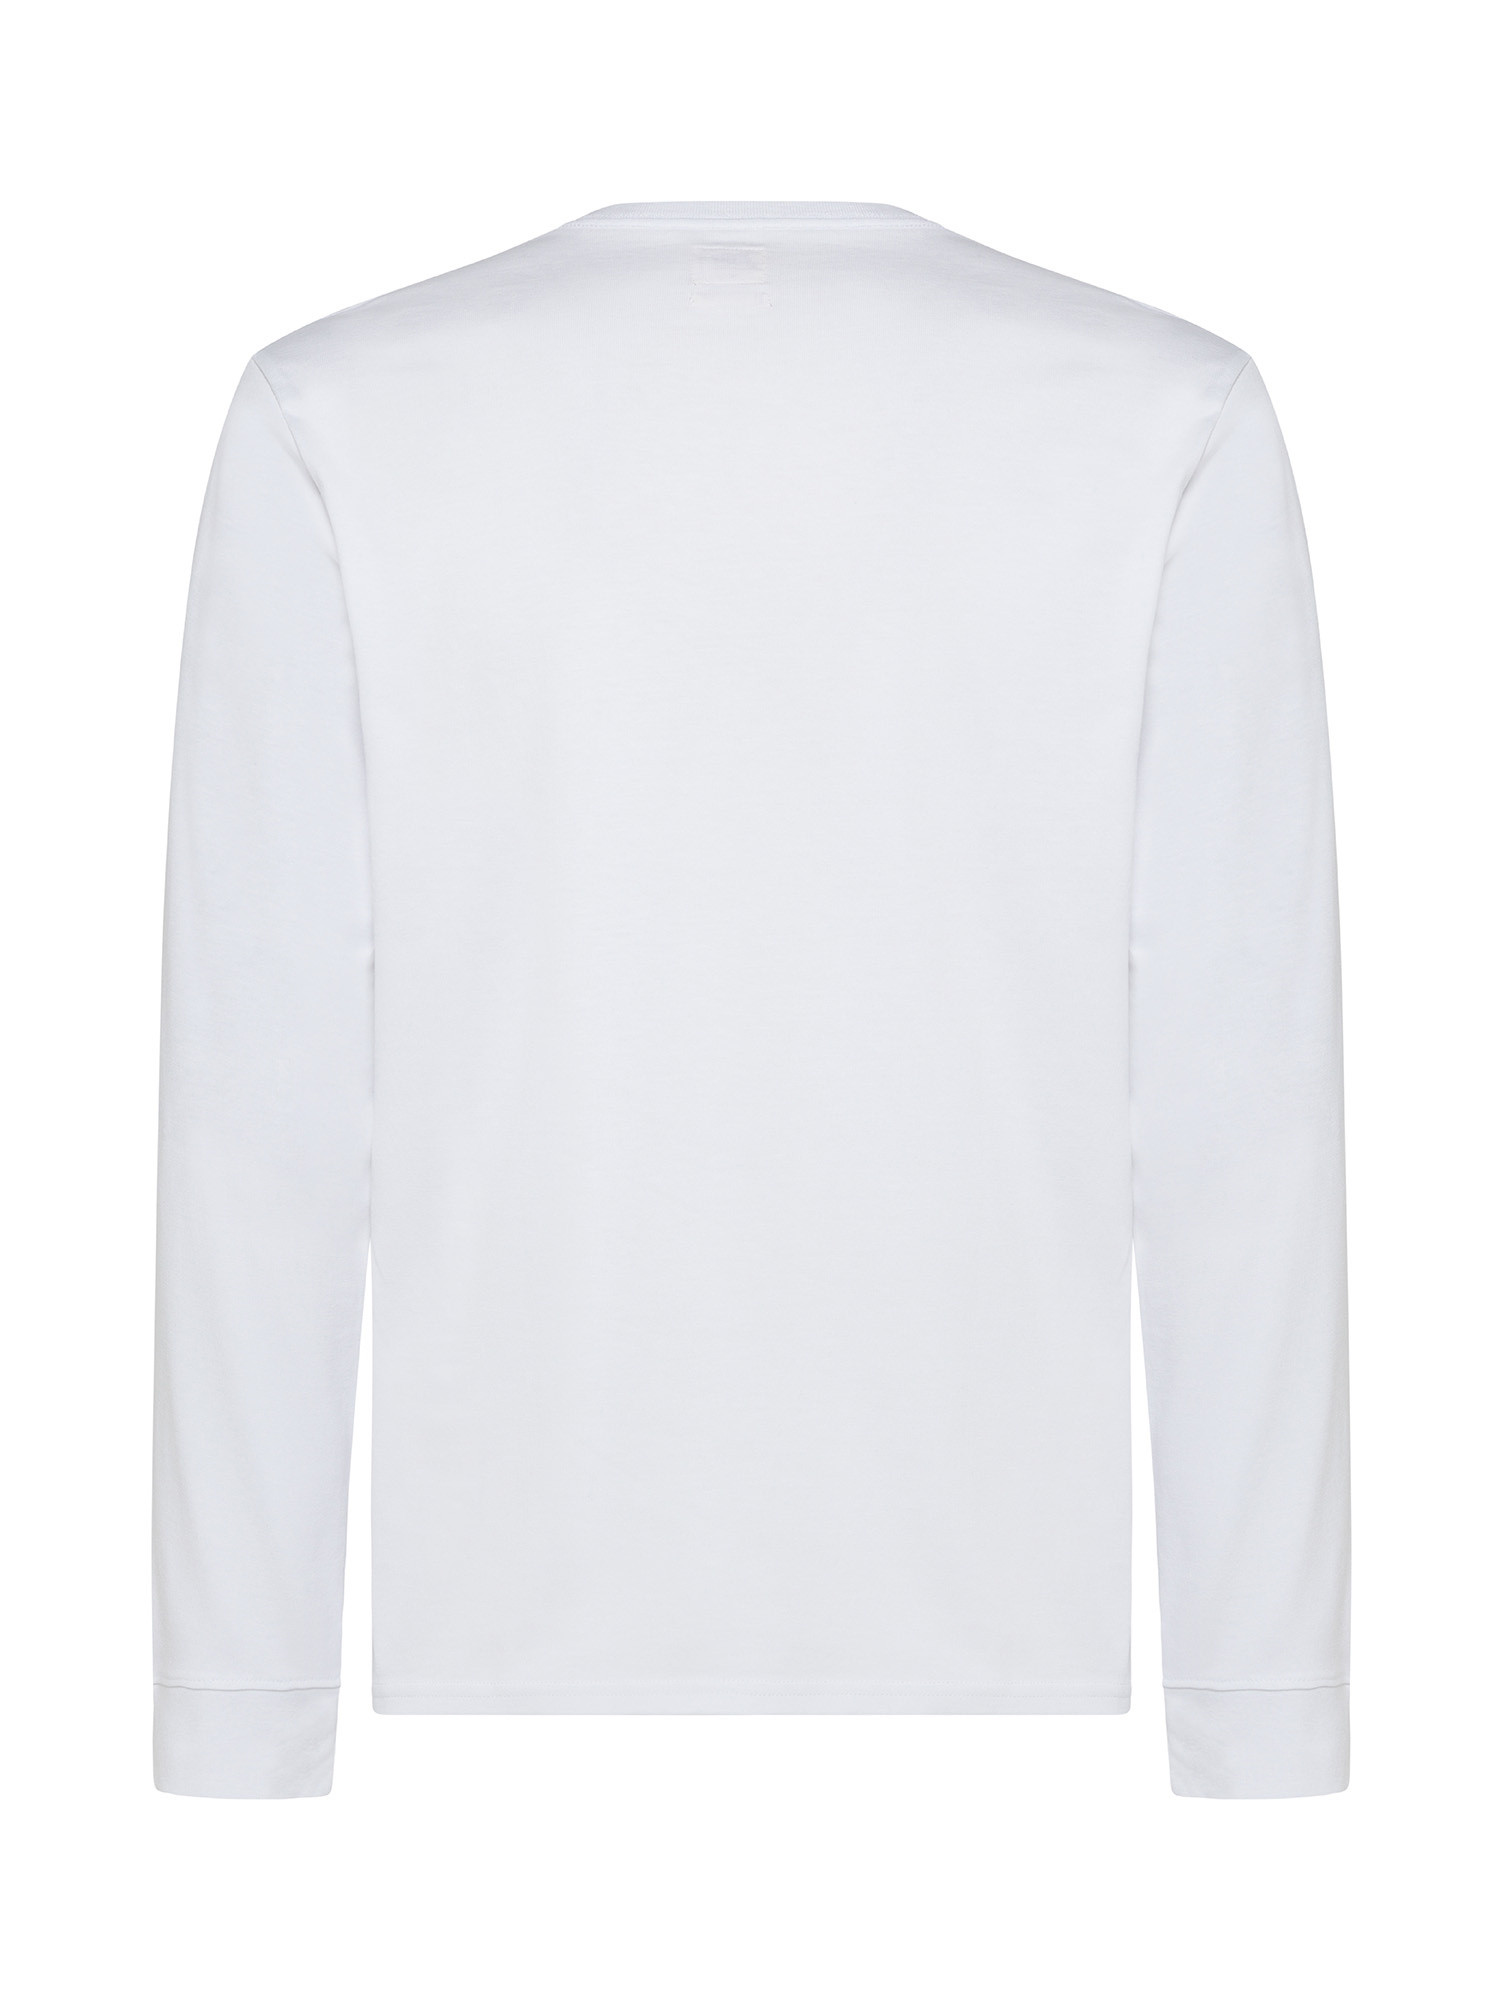 Levi's - Solid color crewneck T-shirt, White, large image number 1